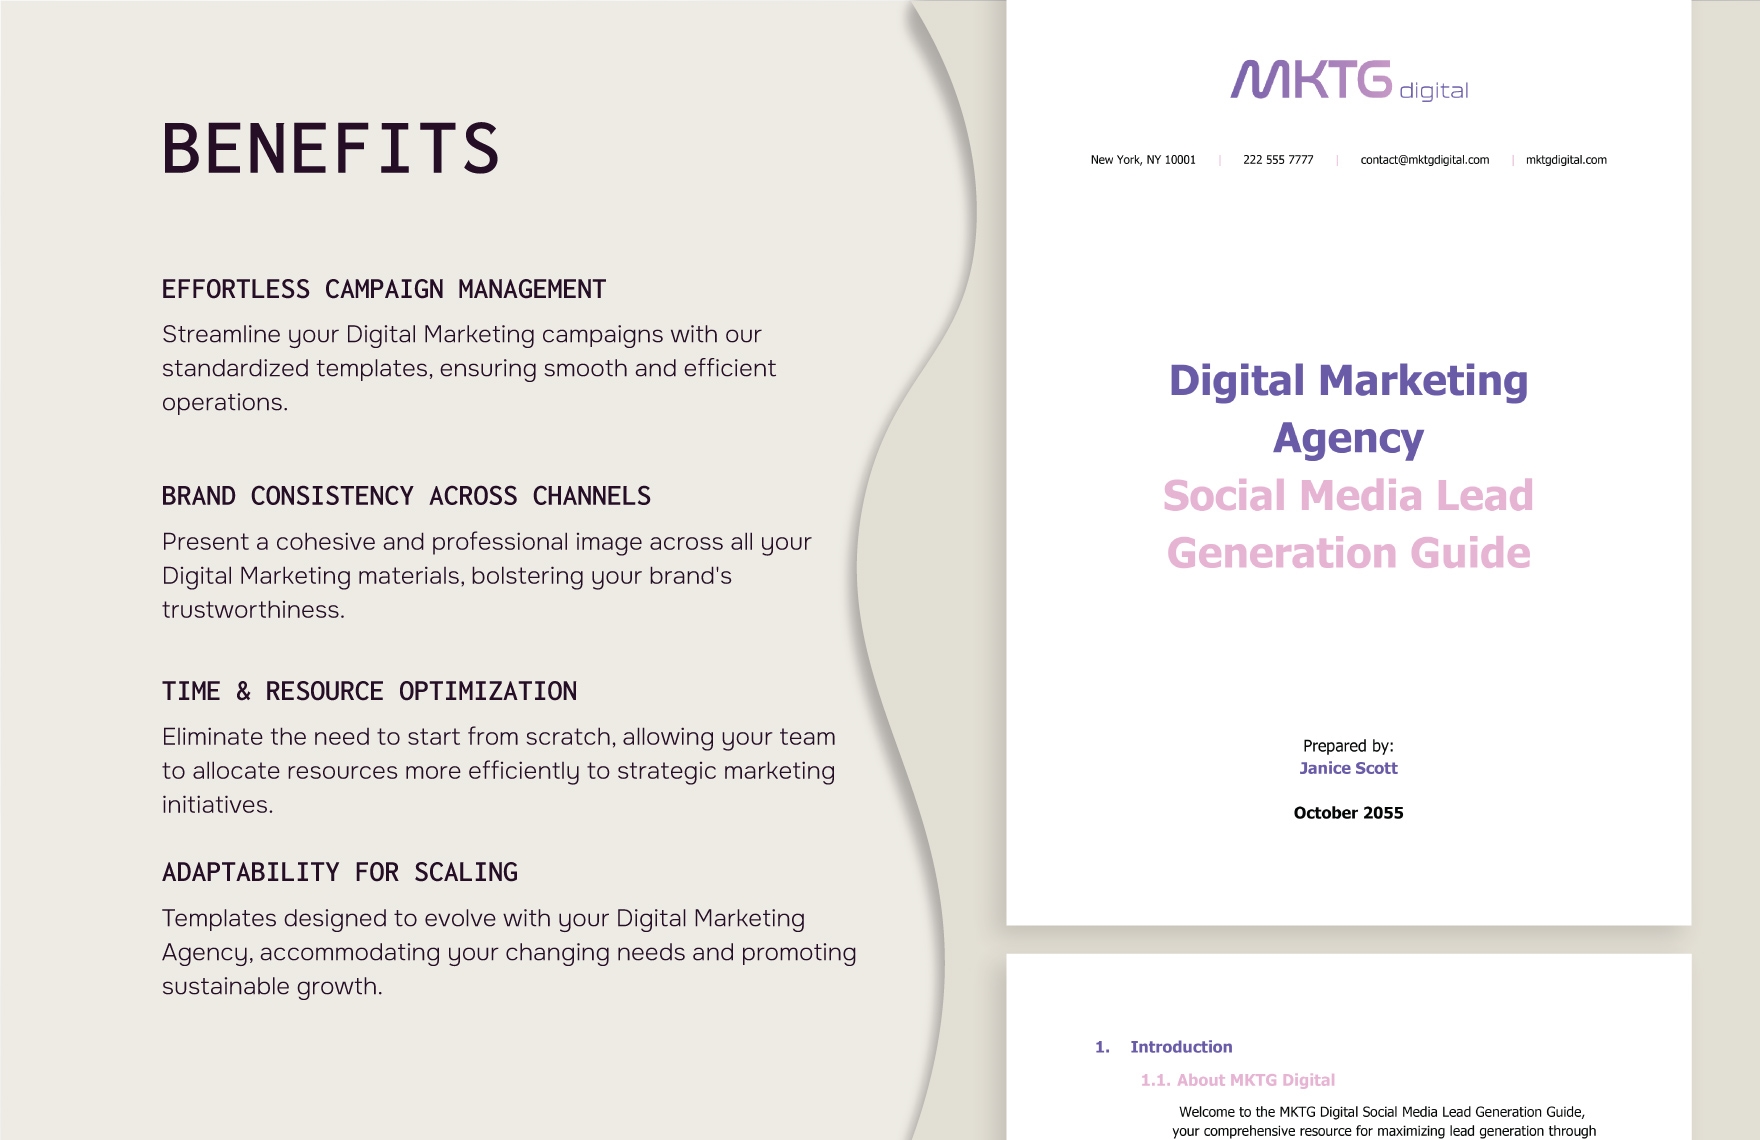 Digital Marketing Agency Social Media Lead Generation Guide Template